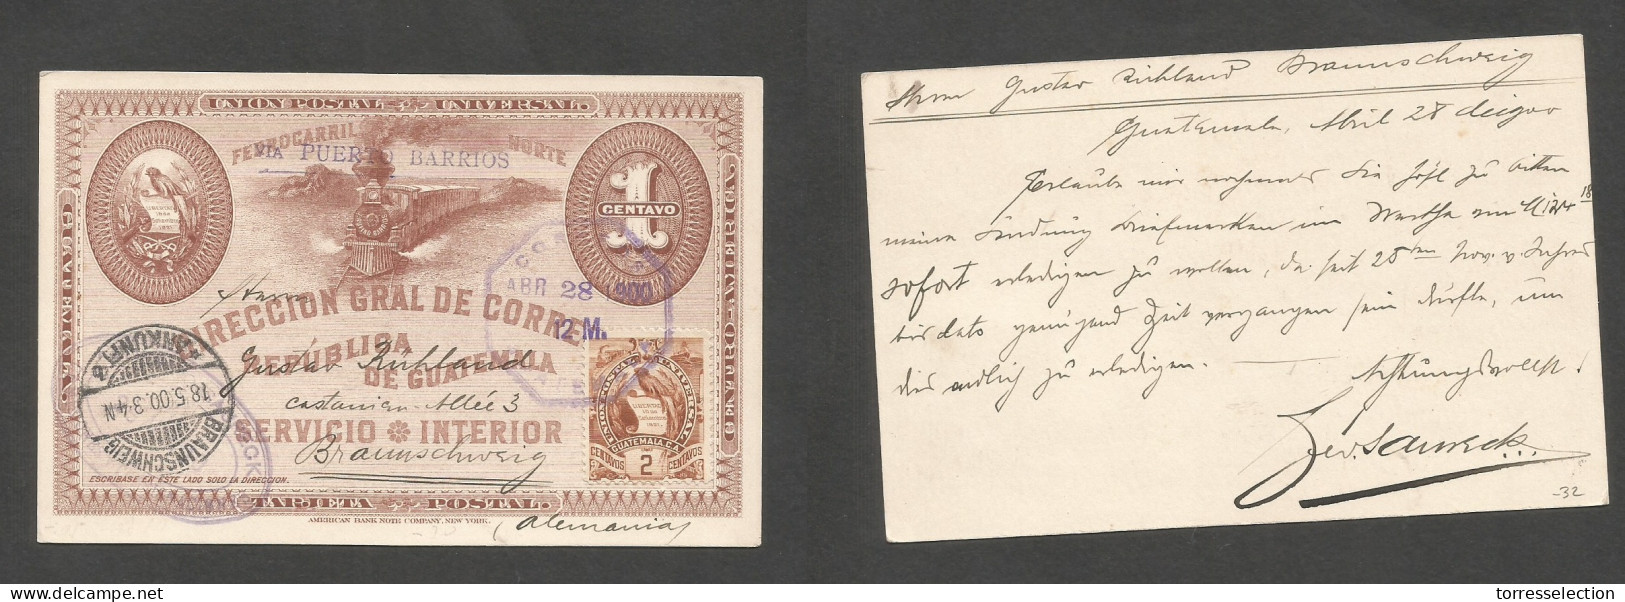 GUATEMALA. 1900 (28 April) GPO - Germany, Braunschweig (18 May) AC Brown Illustr Stat Card + Adtl. All Transited. Fine.  - Guatemala